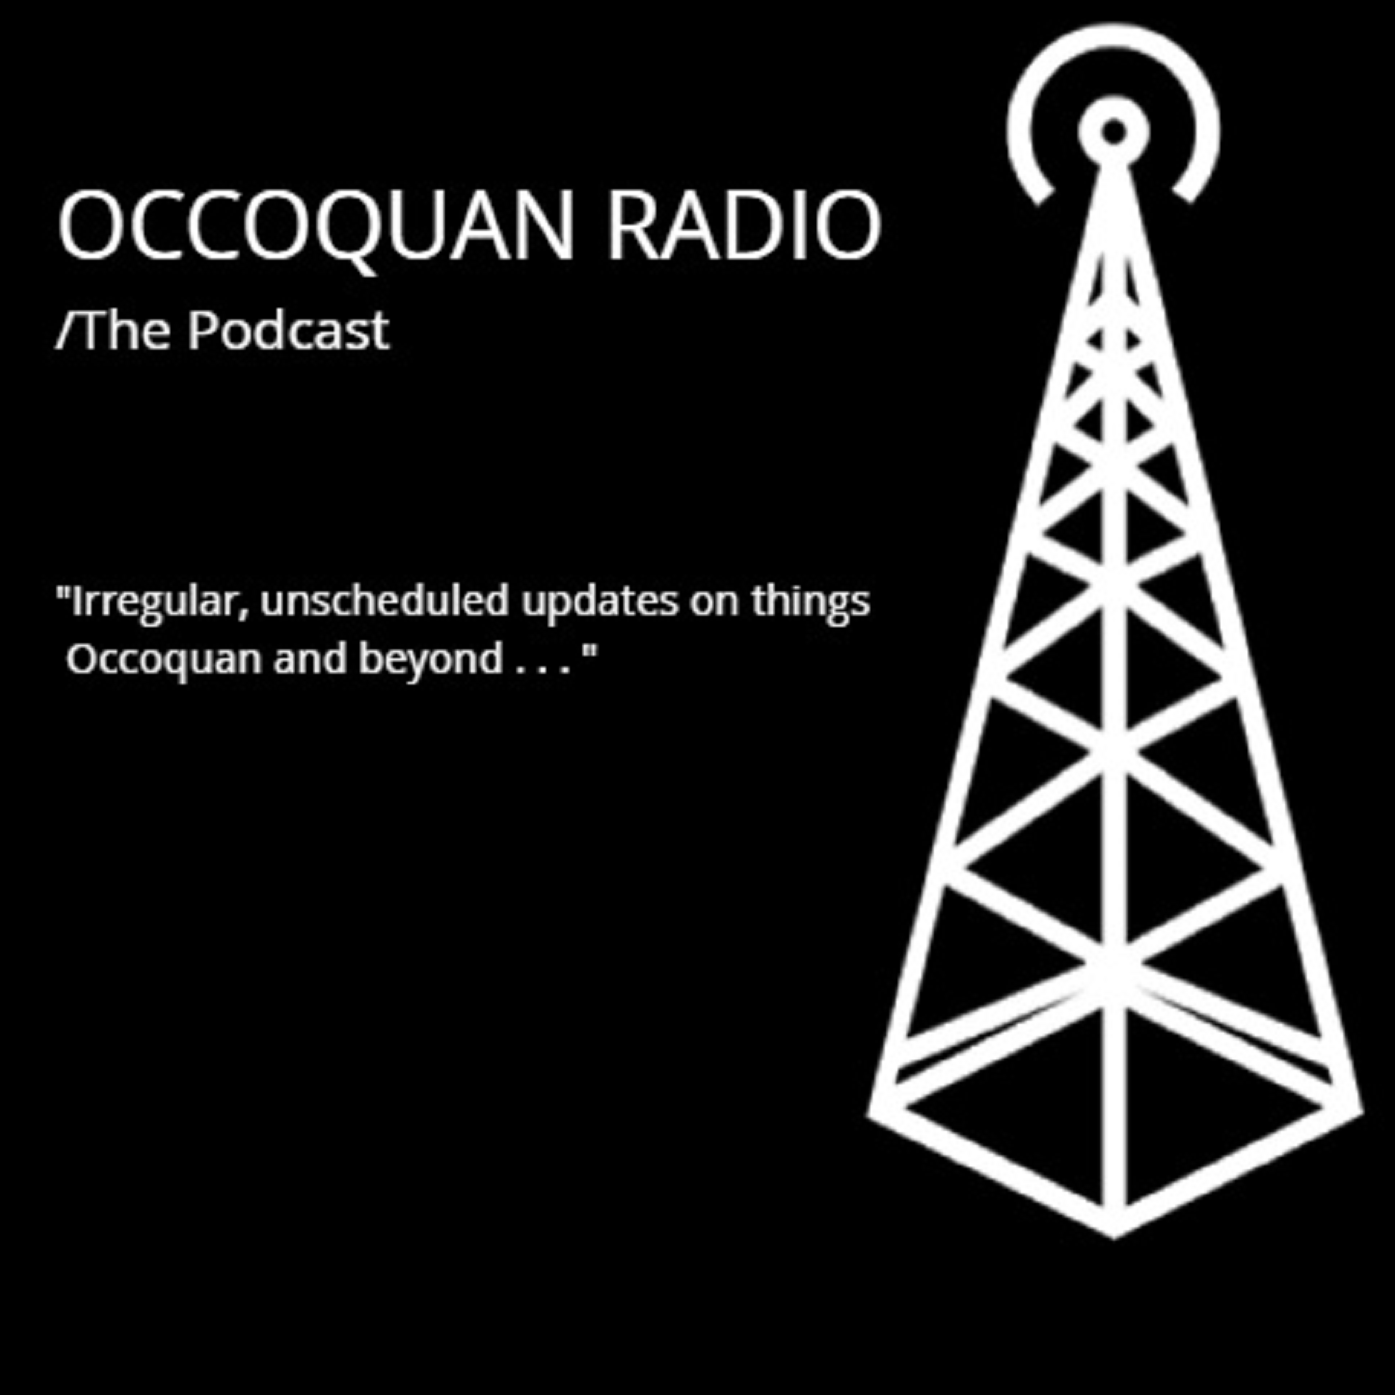 Occoquan Radio/The Podcast